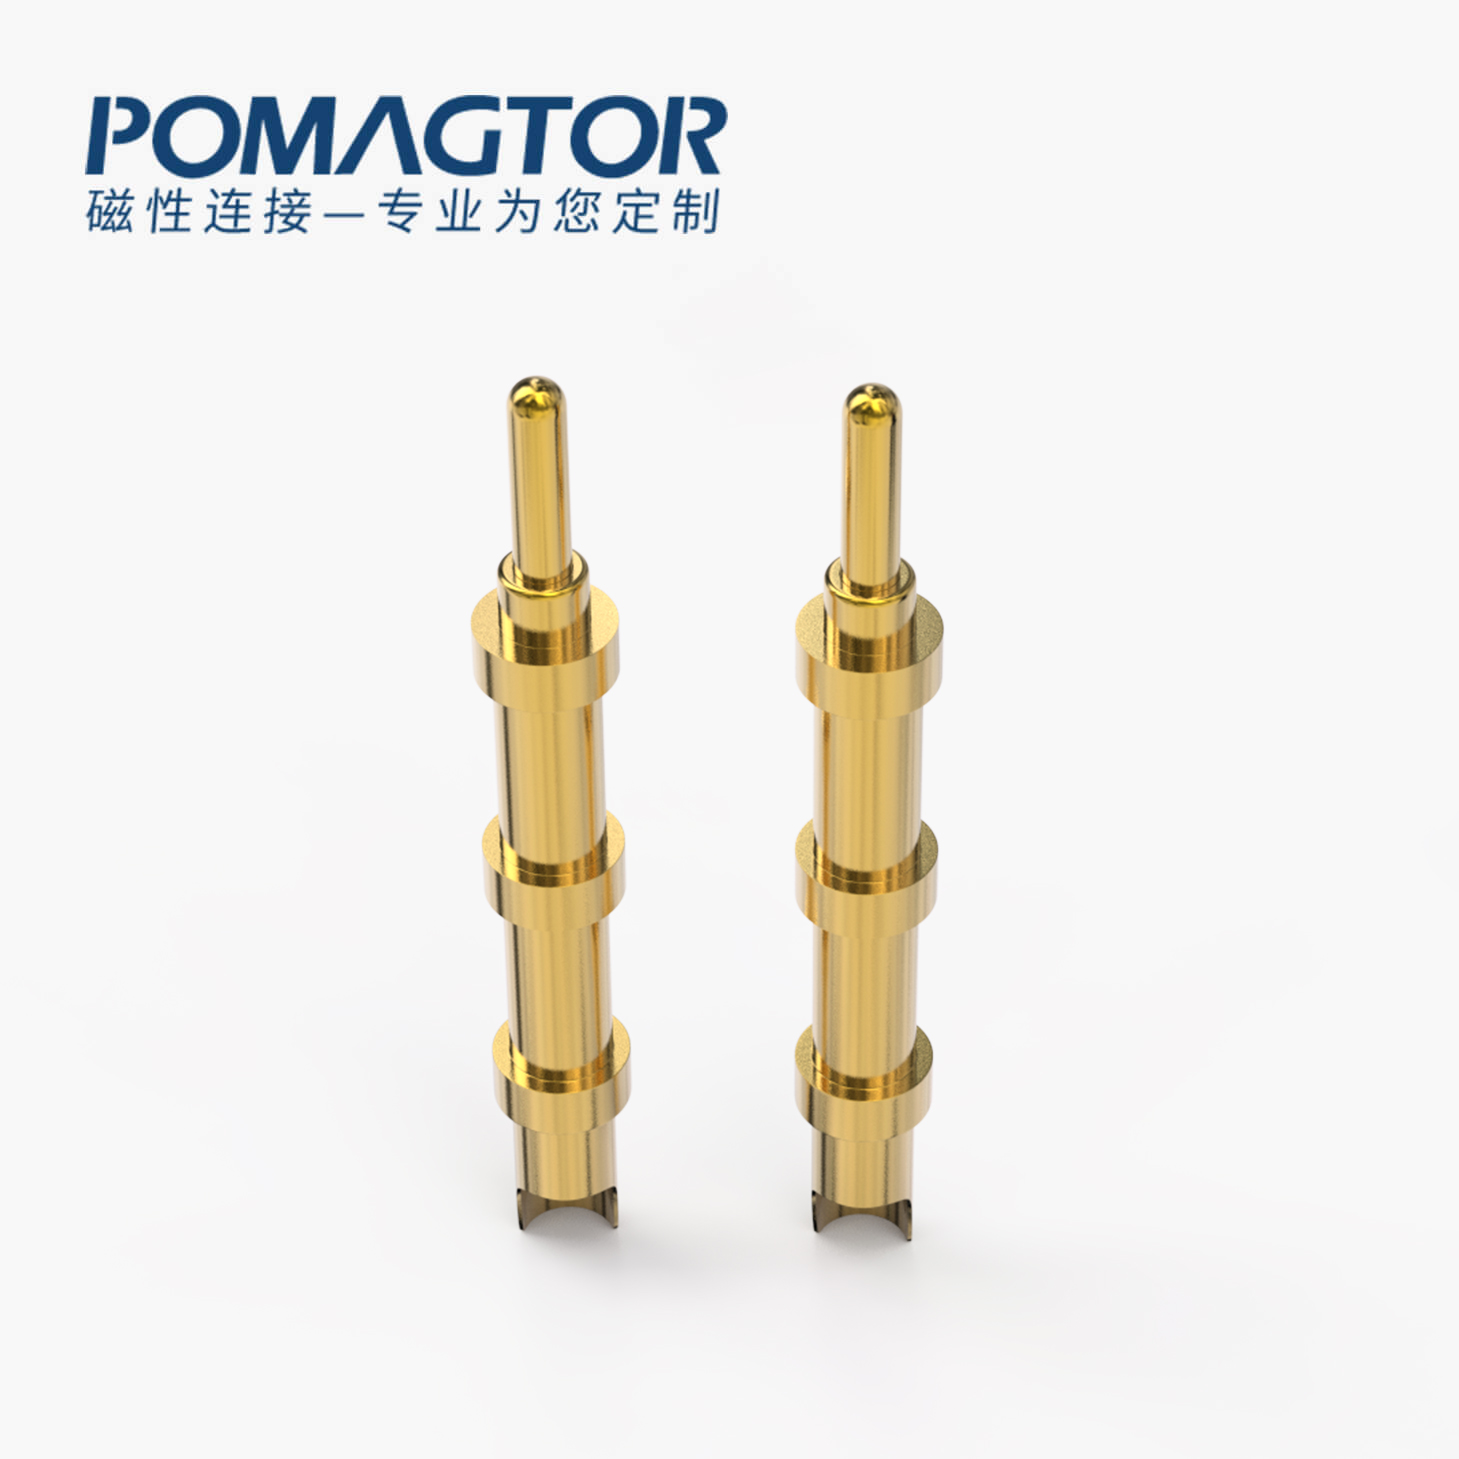 POGO PIN 焊线式：电镀黄铜Au40u，电压20V，电流1A，工作行程2.0mm:110±25gf，弹力20000次+，工作温度-30°~85°